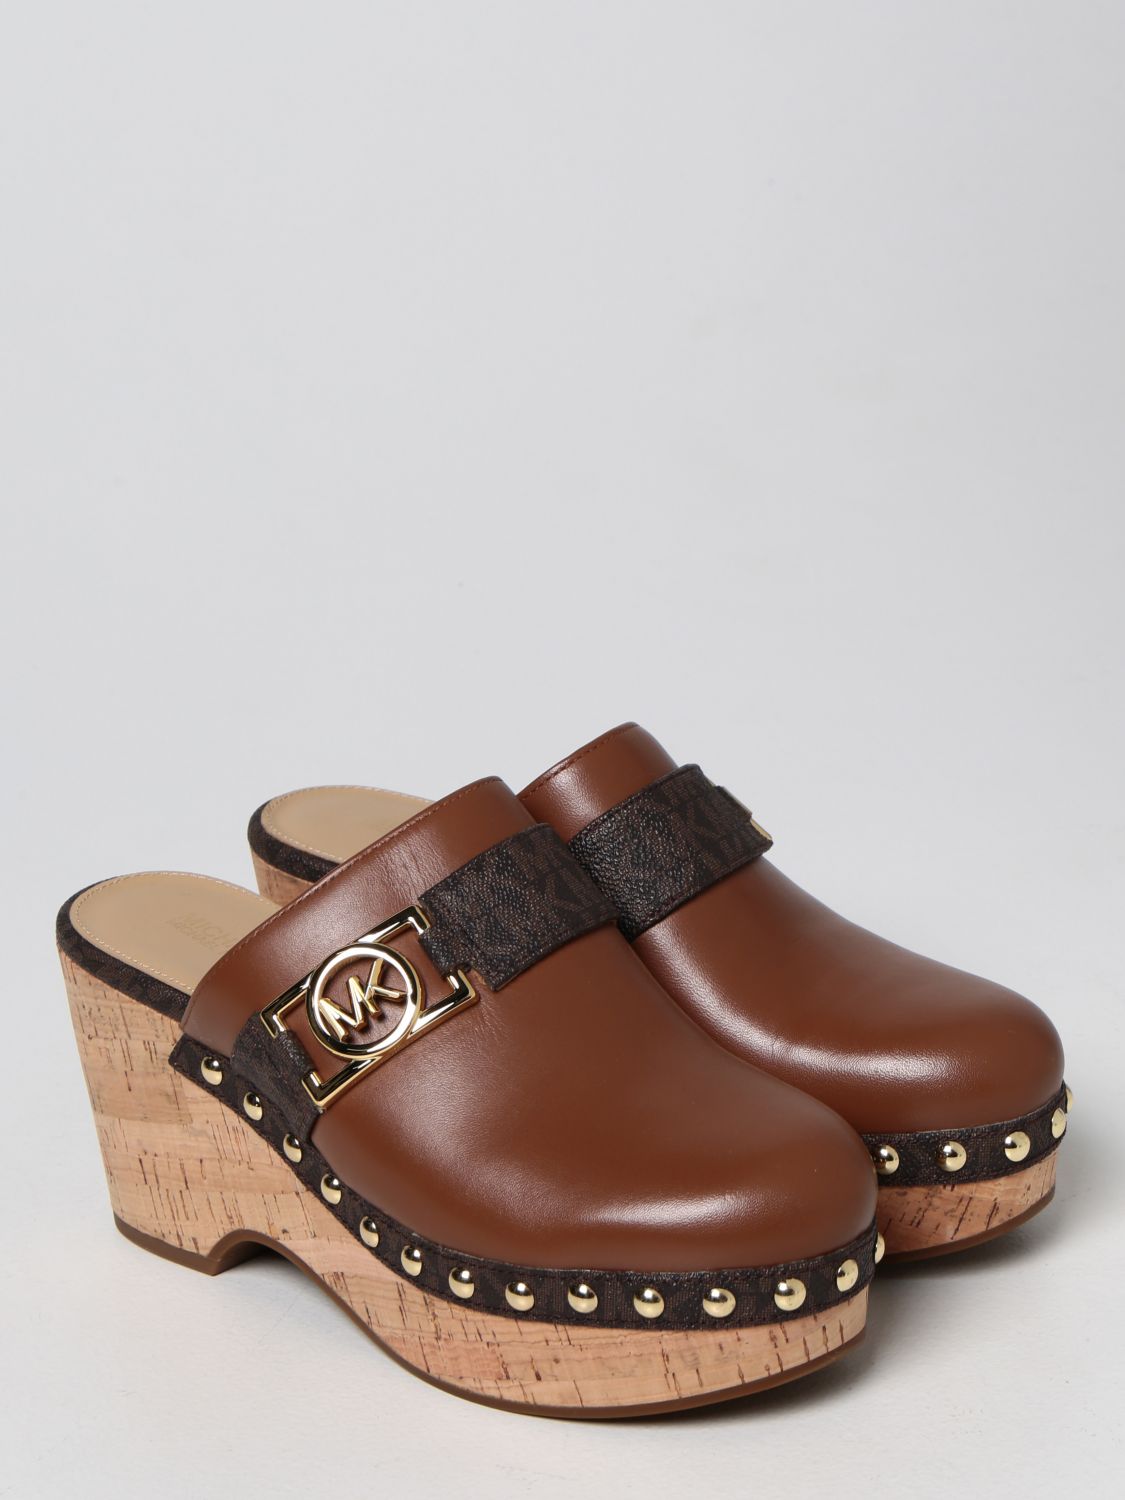 MICHAEL KORS: Michael leather clog - Leather | Michael Kors high heel shoes  40R2APMP1L online on 